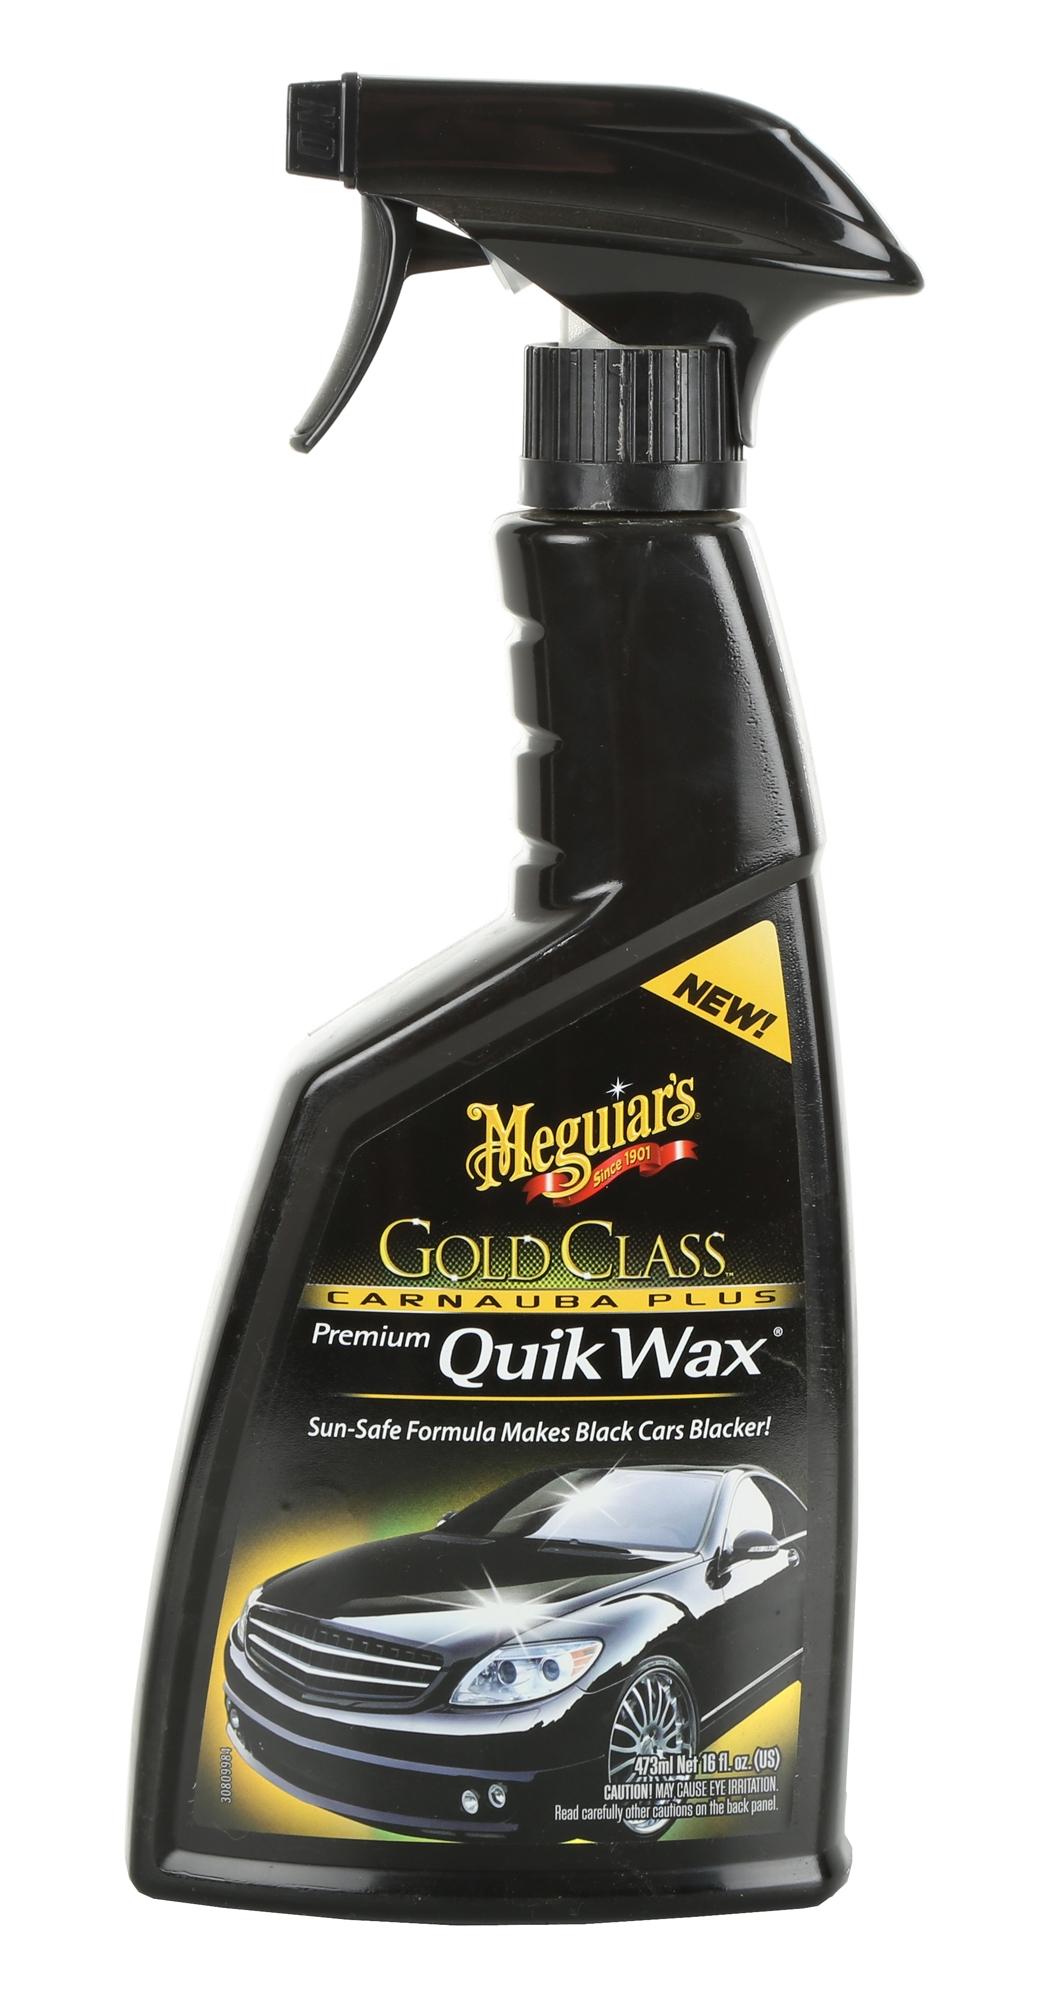 Meguiars Gold Class Premium Quik Wax